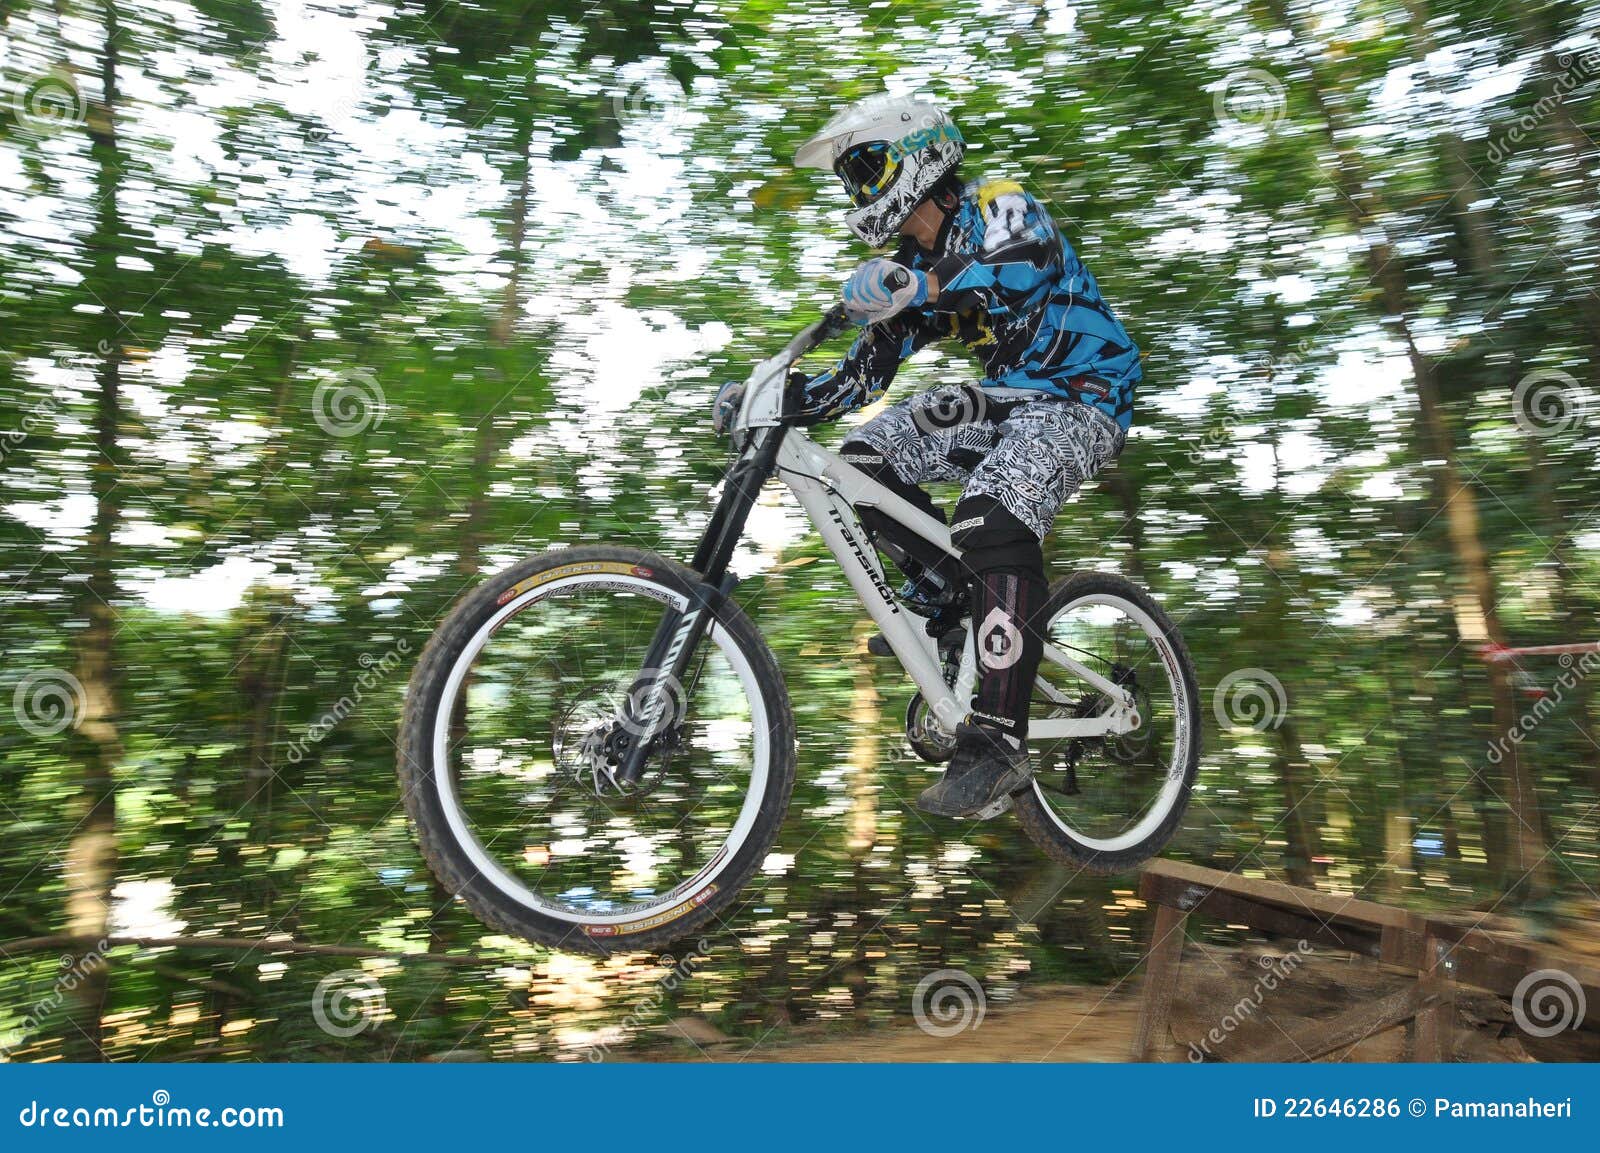 Downhill Mountain Bike Race Editorial Photo - Image of biker, fast: 226462861300 x 953